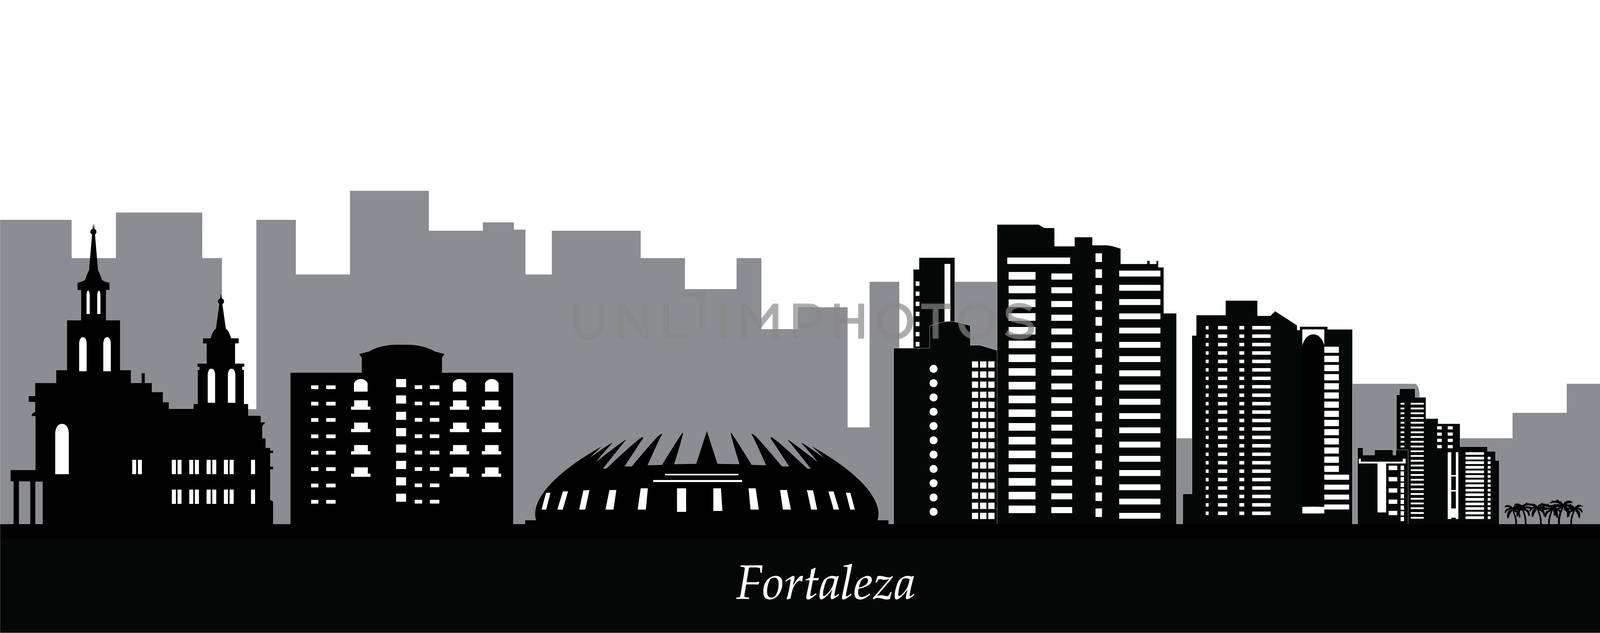 fortaleza  skyline by compuinfoto